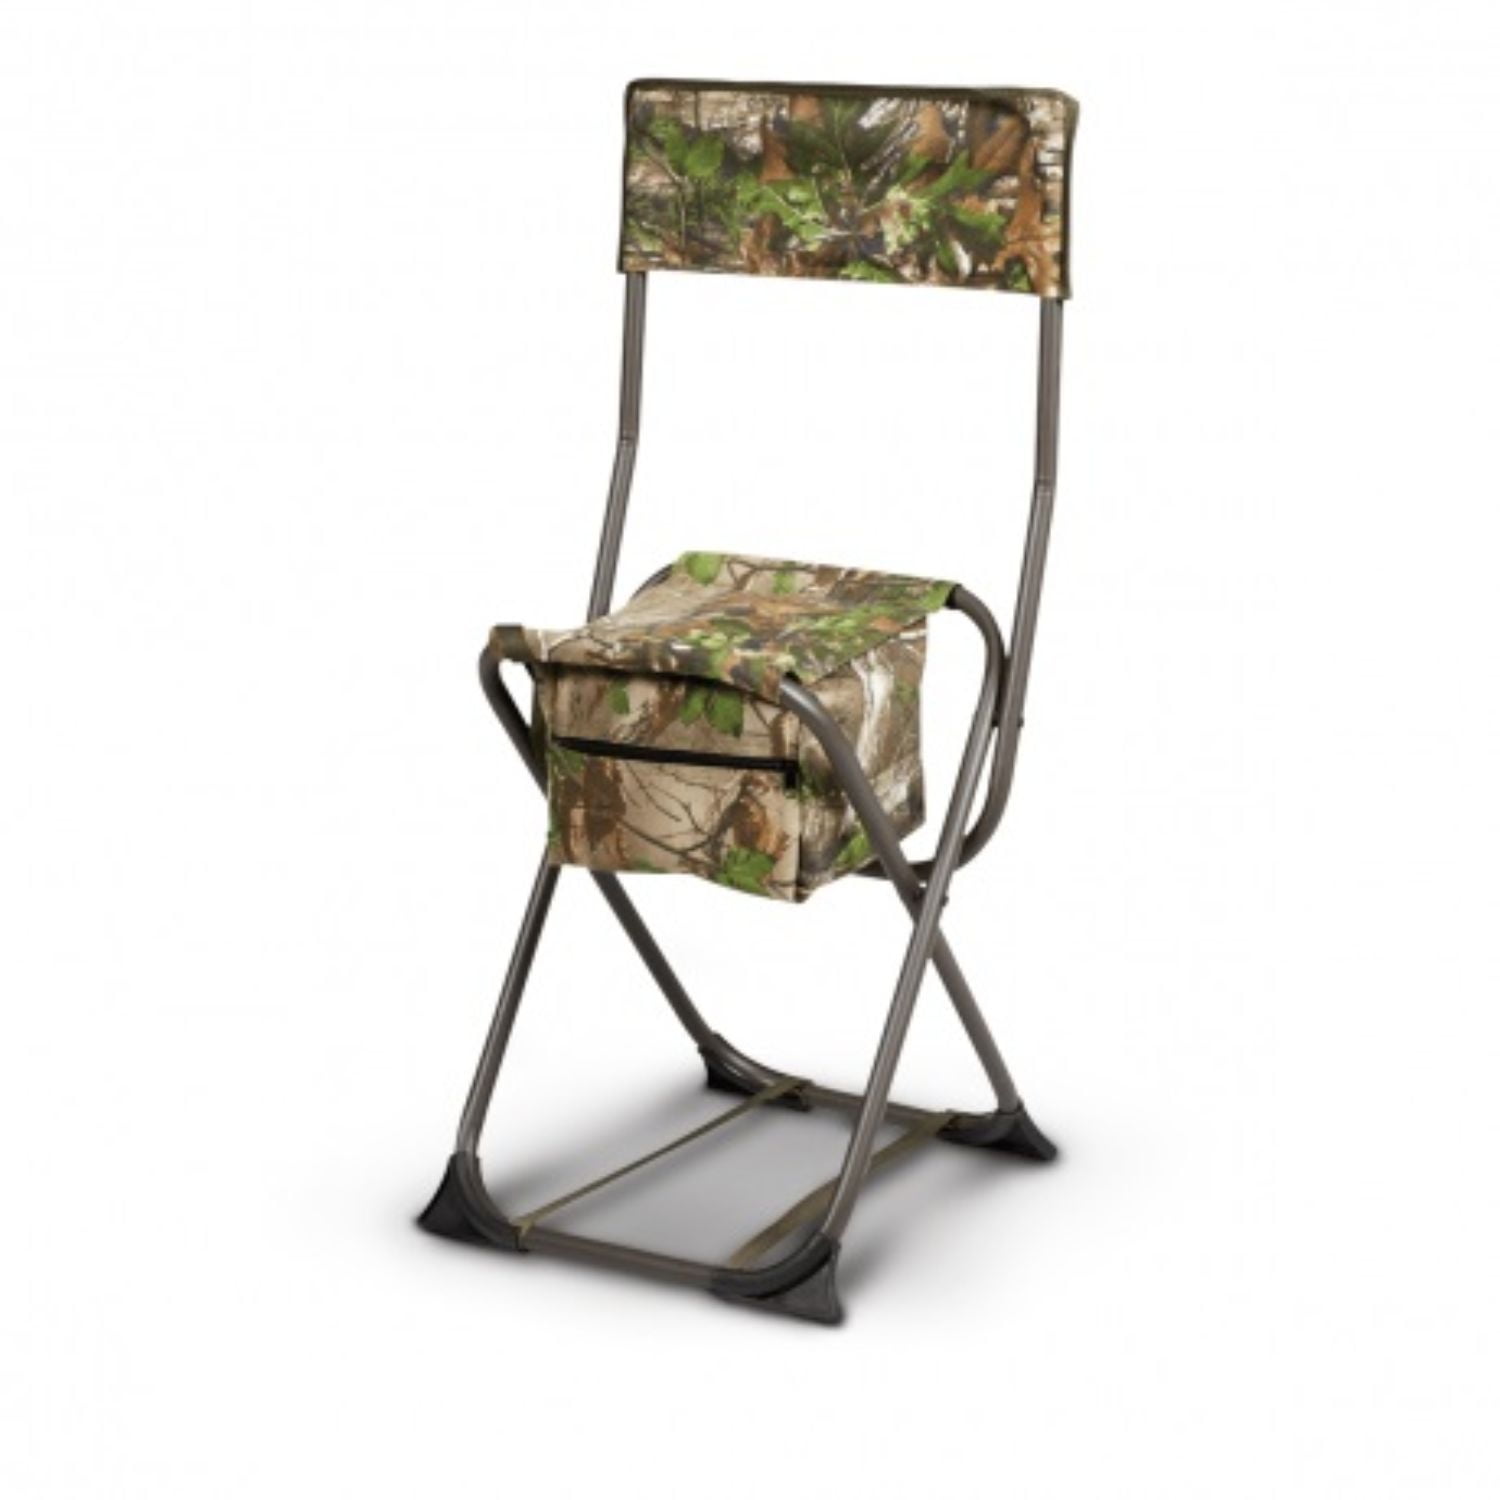 Hunter's Specialties RT Edge Camo Bunsaver Seat Cushion by